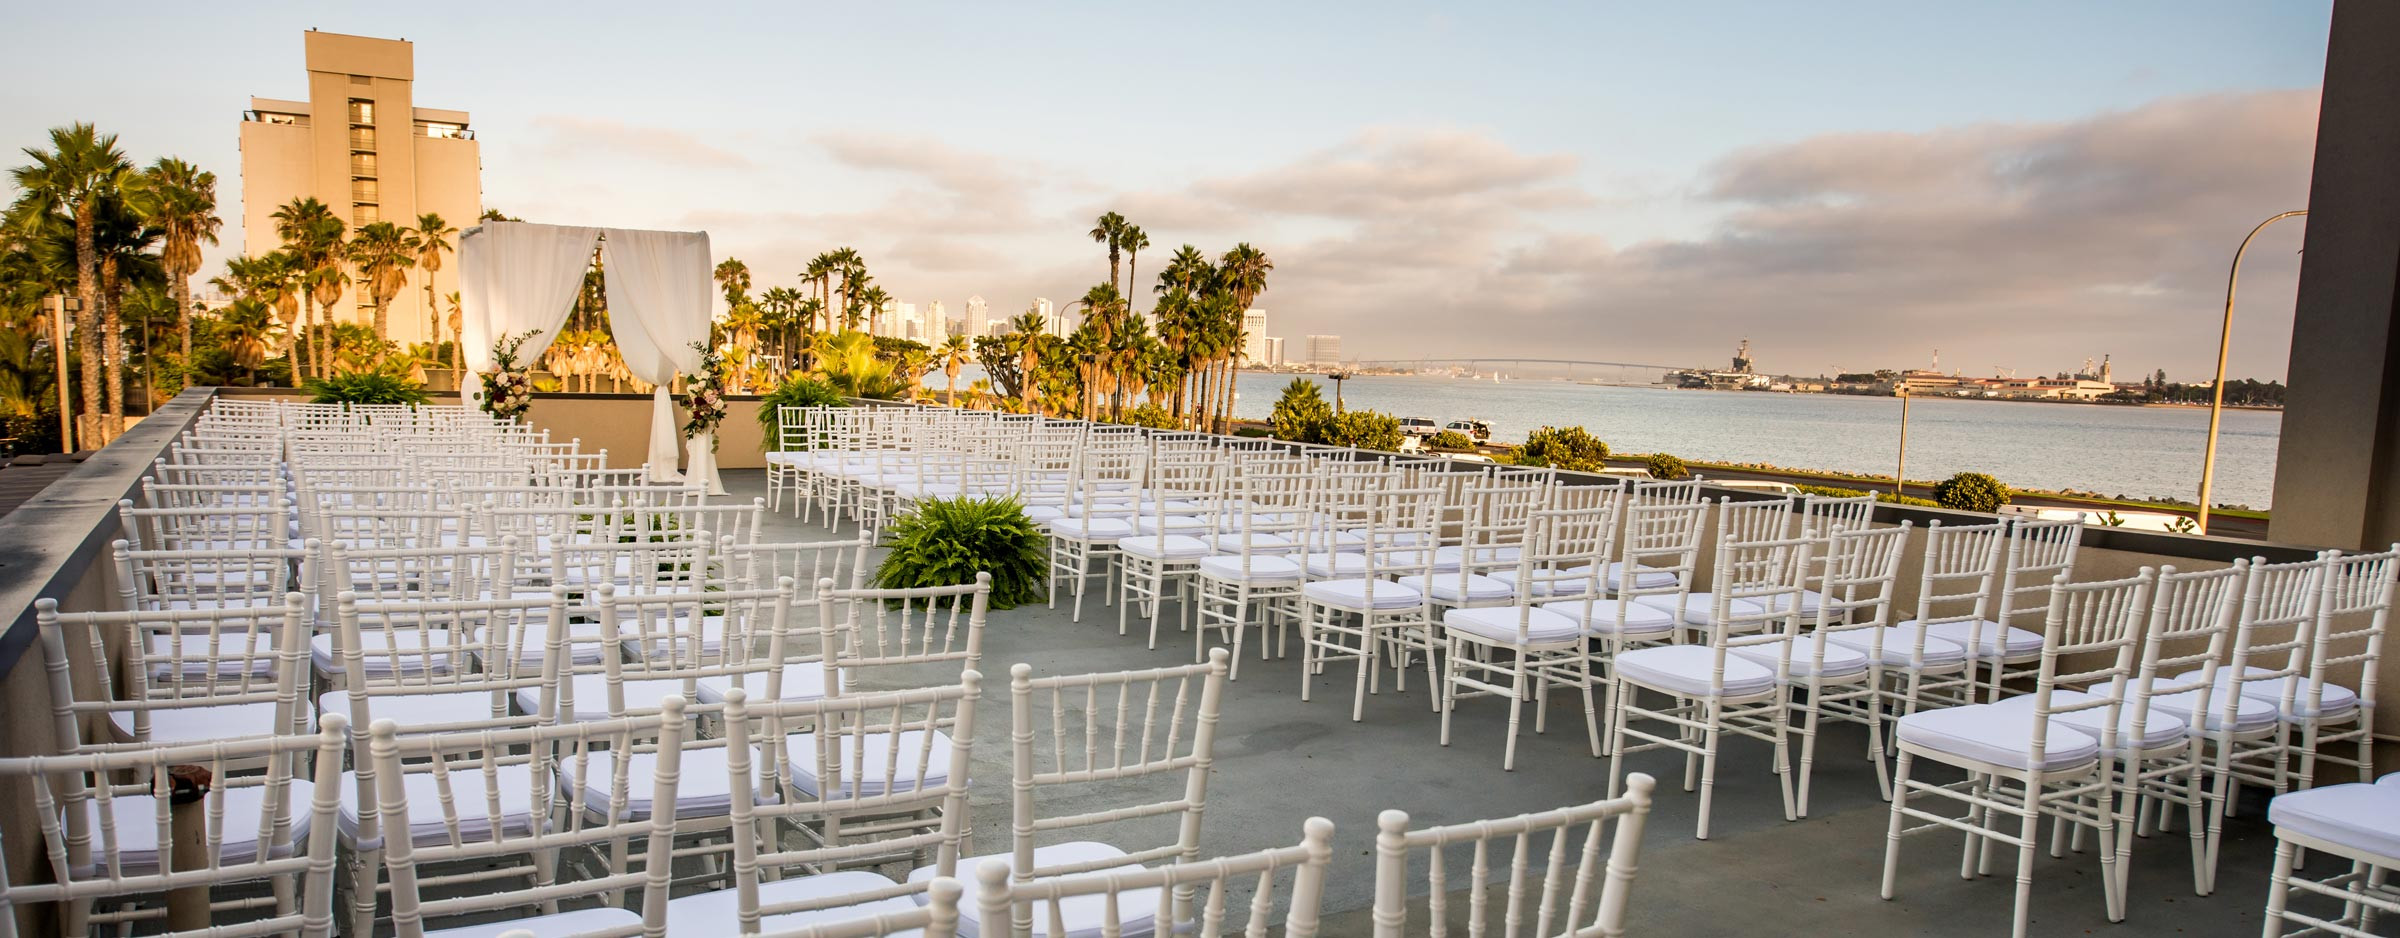 San Diego Wedding Venues
 Best Wedding Venues Harbor Island in San Diego